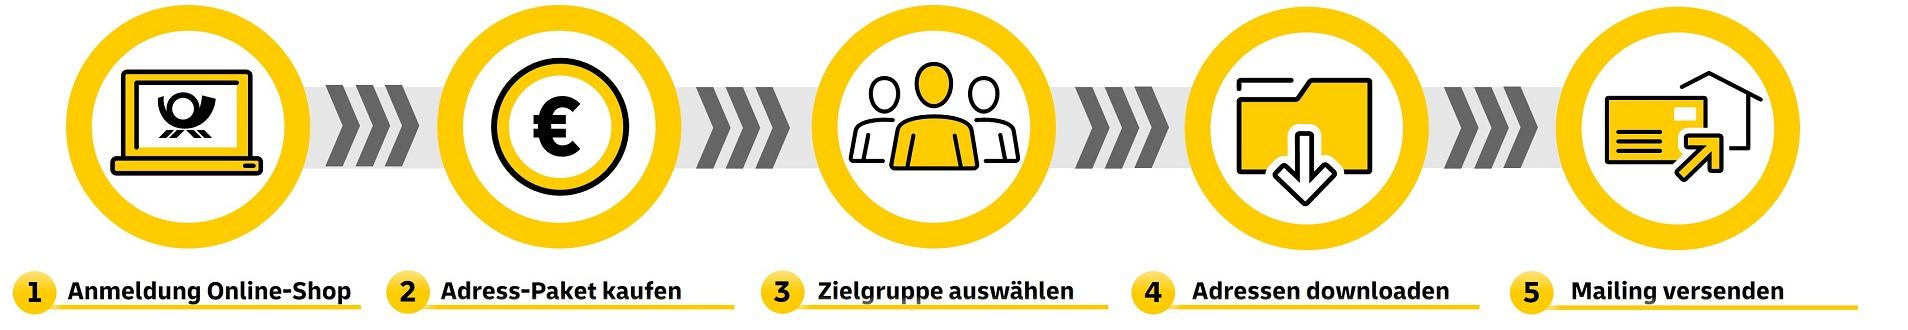 Deutsche Post Direkt - Business addresses process